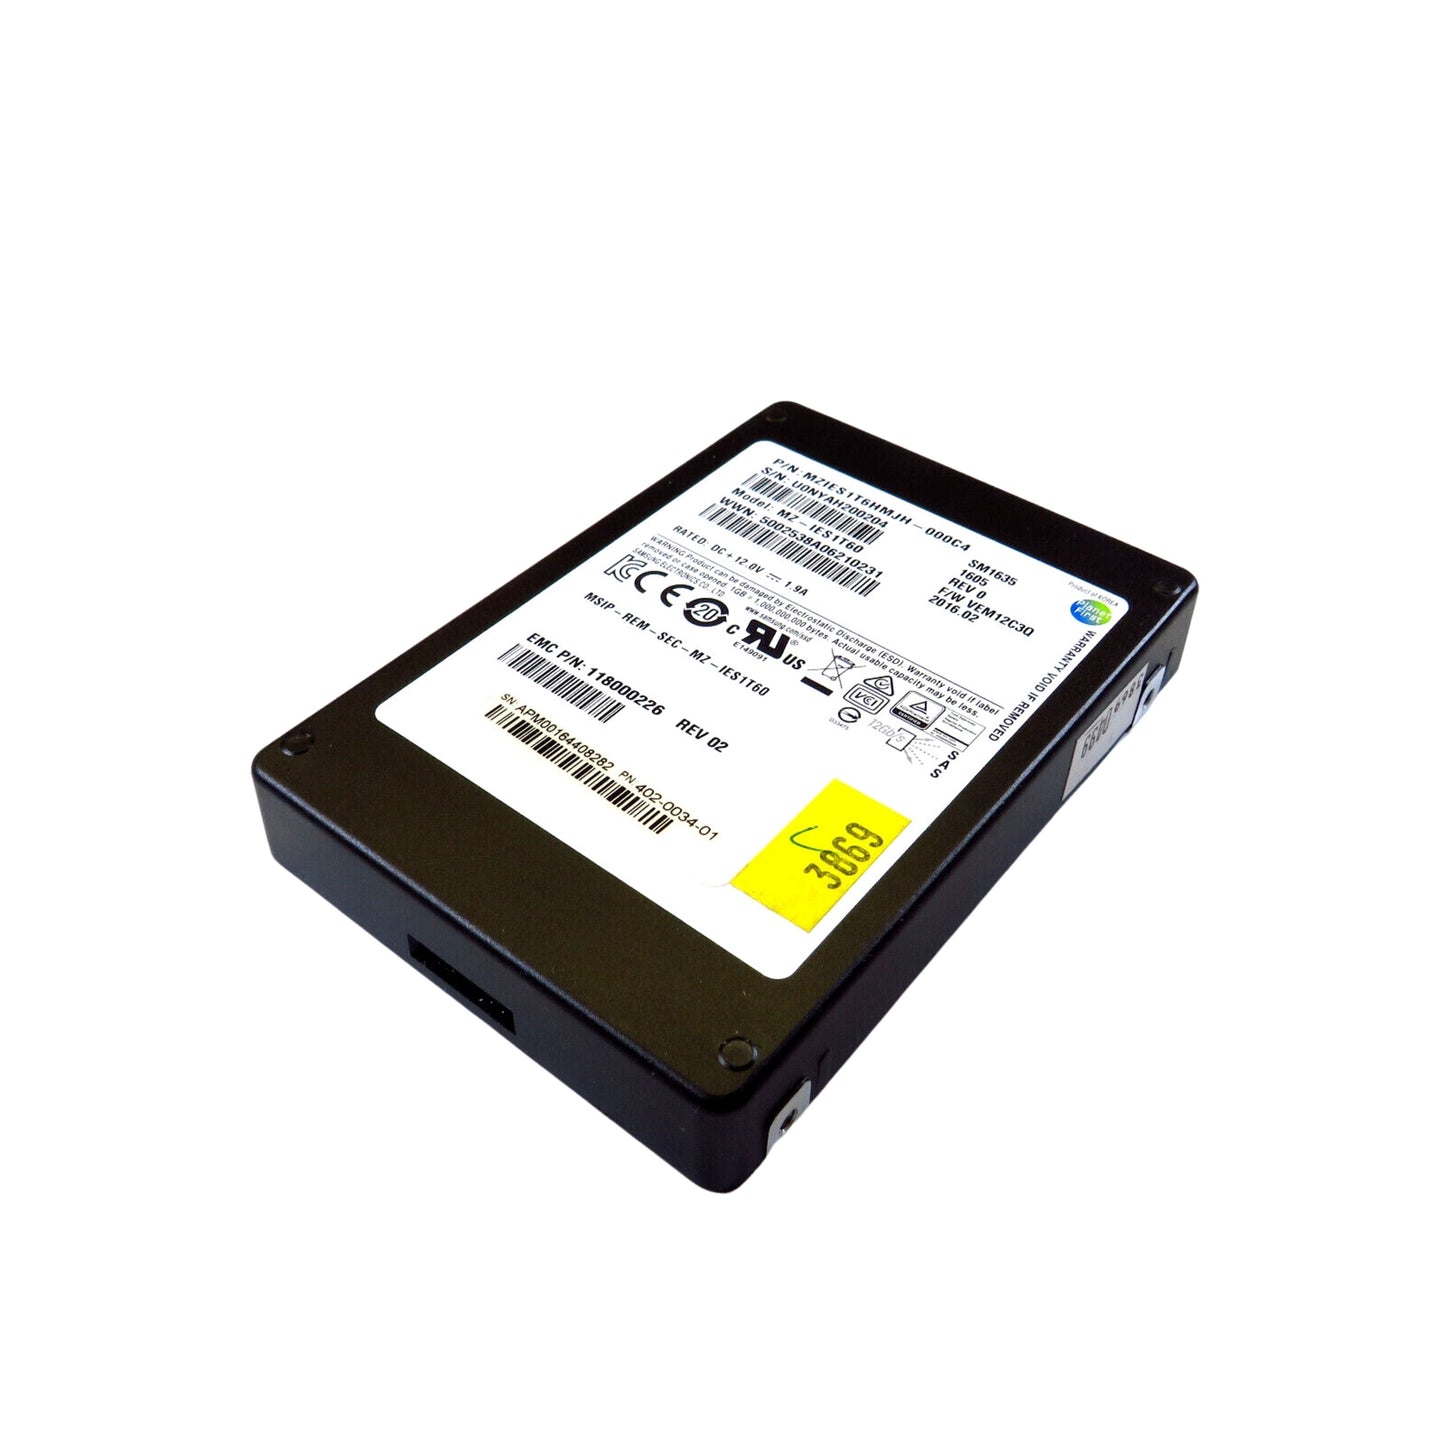 EMC 118000226 402-0034-01 MZ-IES1T60 1.6TB 2.5" SAS 12Gbps SSD Solid State Drive (Refurbished)